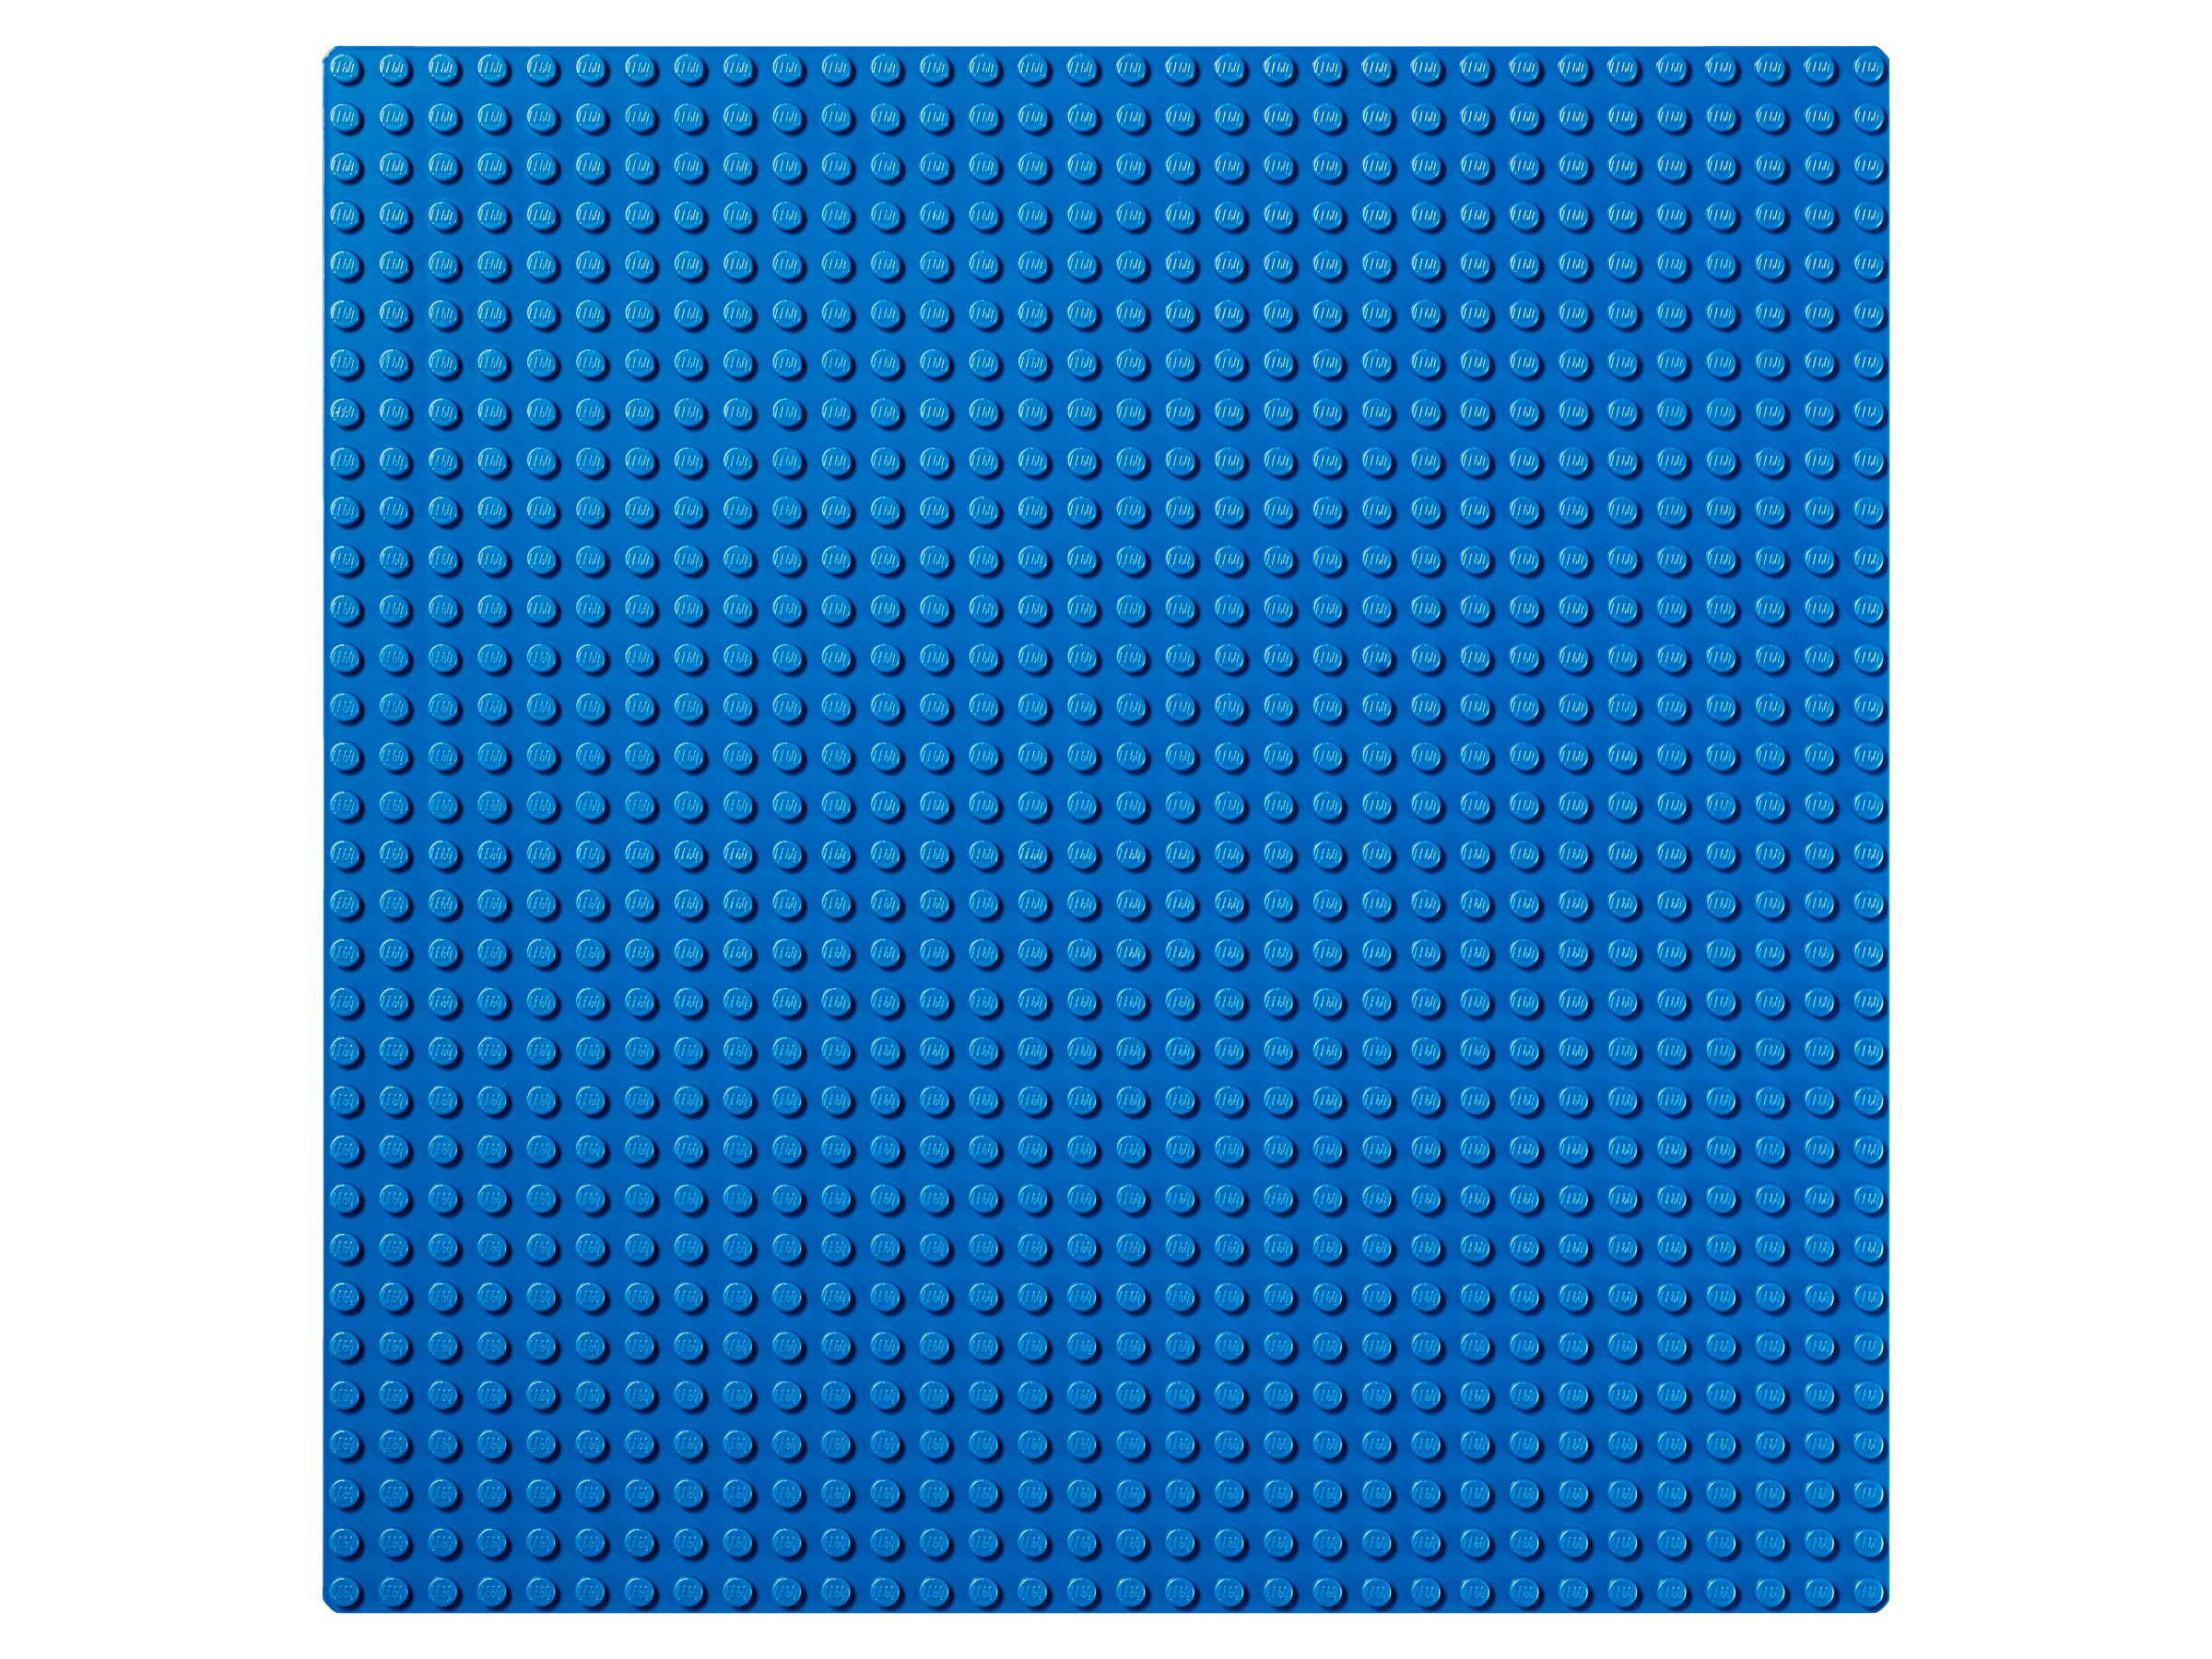 LEGO_10714_alt3.jpg